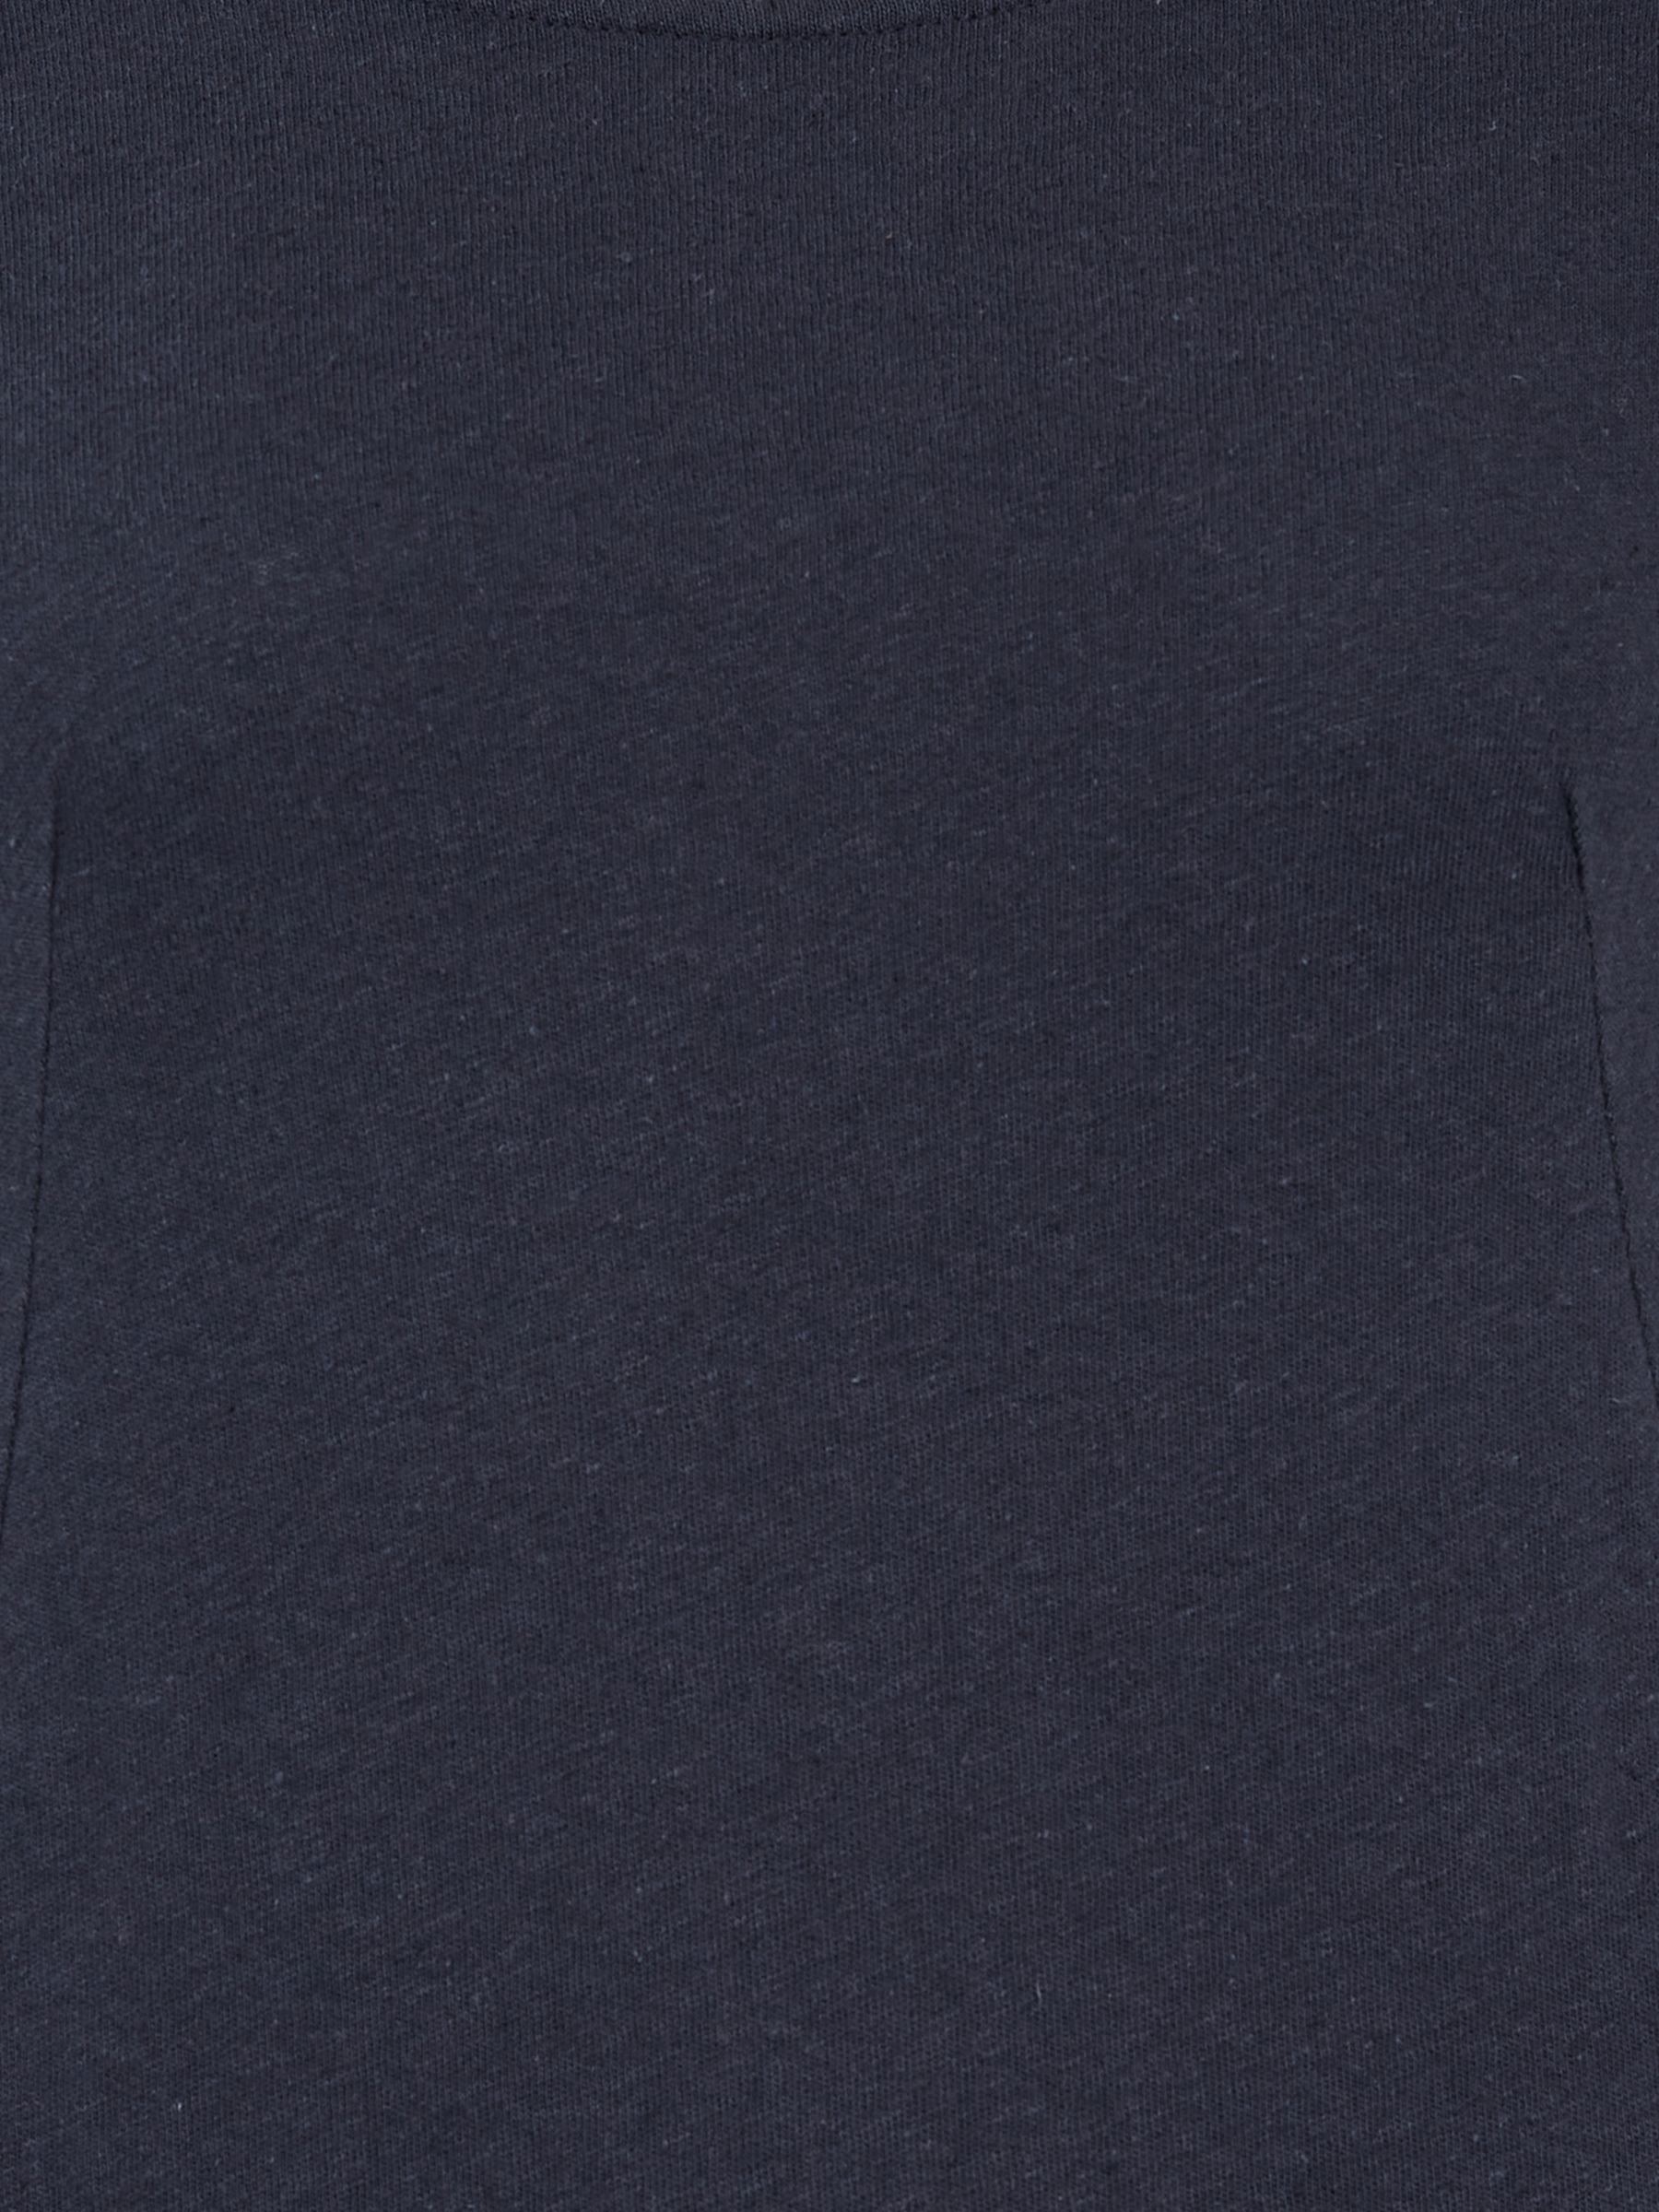 Celtic & Co. Button Back Linen Blend Midi Dress, Navy, 8